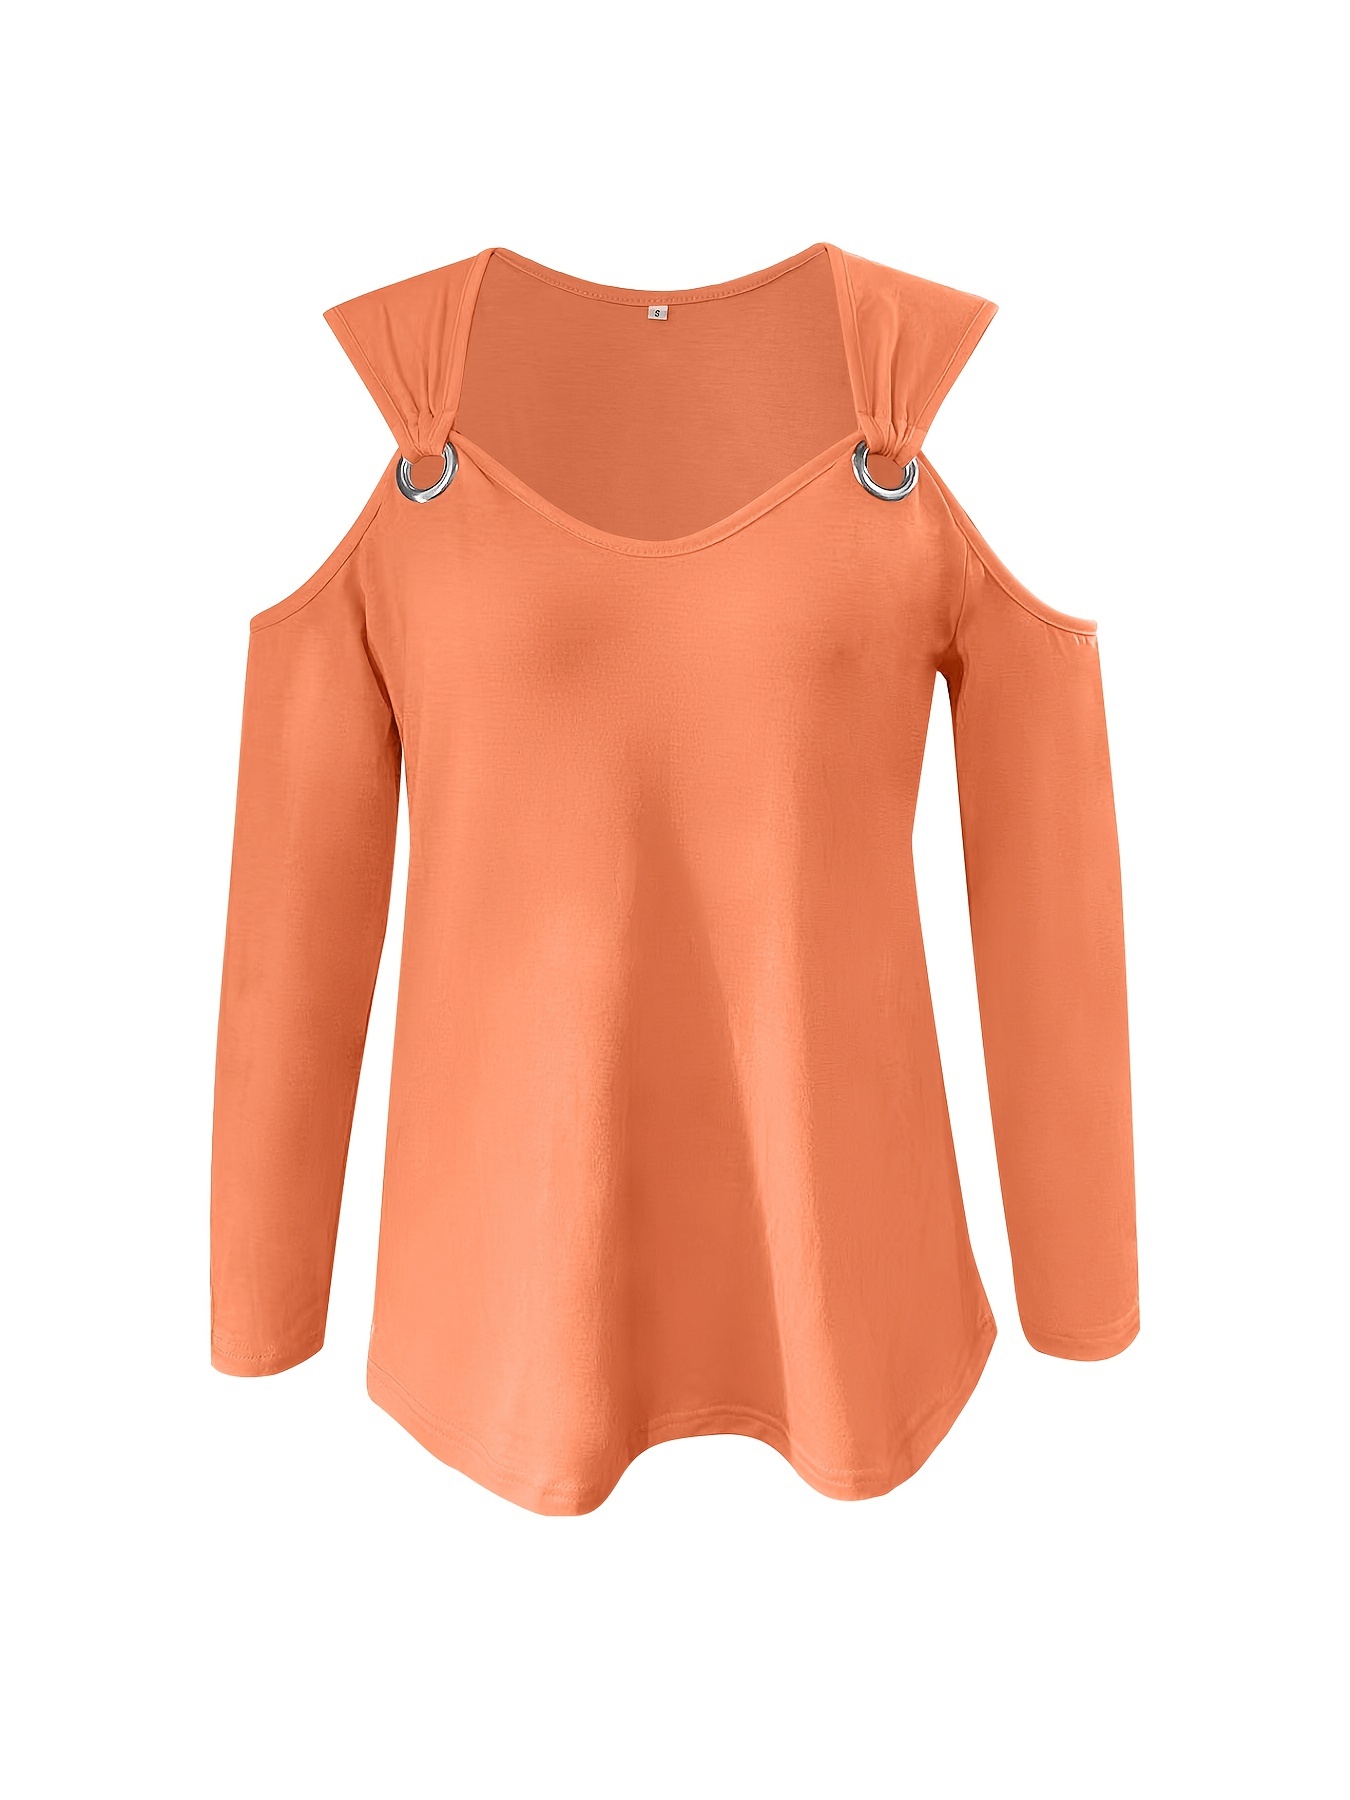 LUCKY BRAND WOMENS Shirt Medium Orange Cold Shoulder Short Sleeve